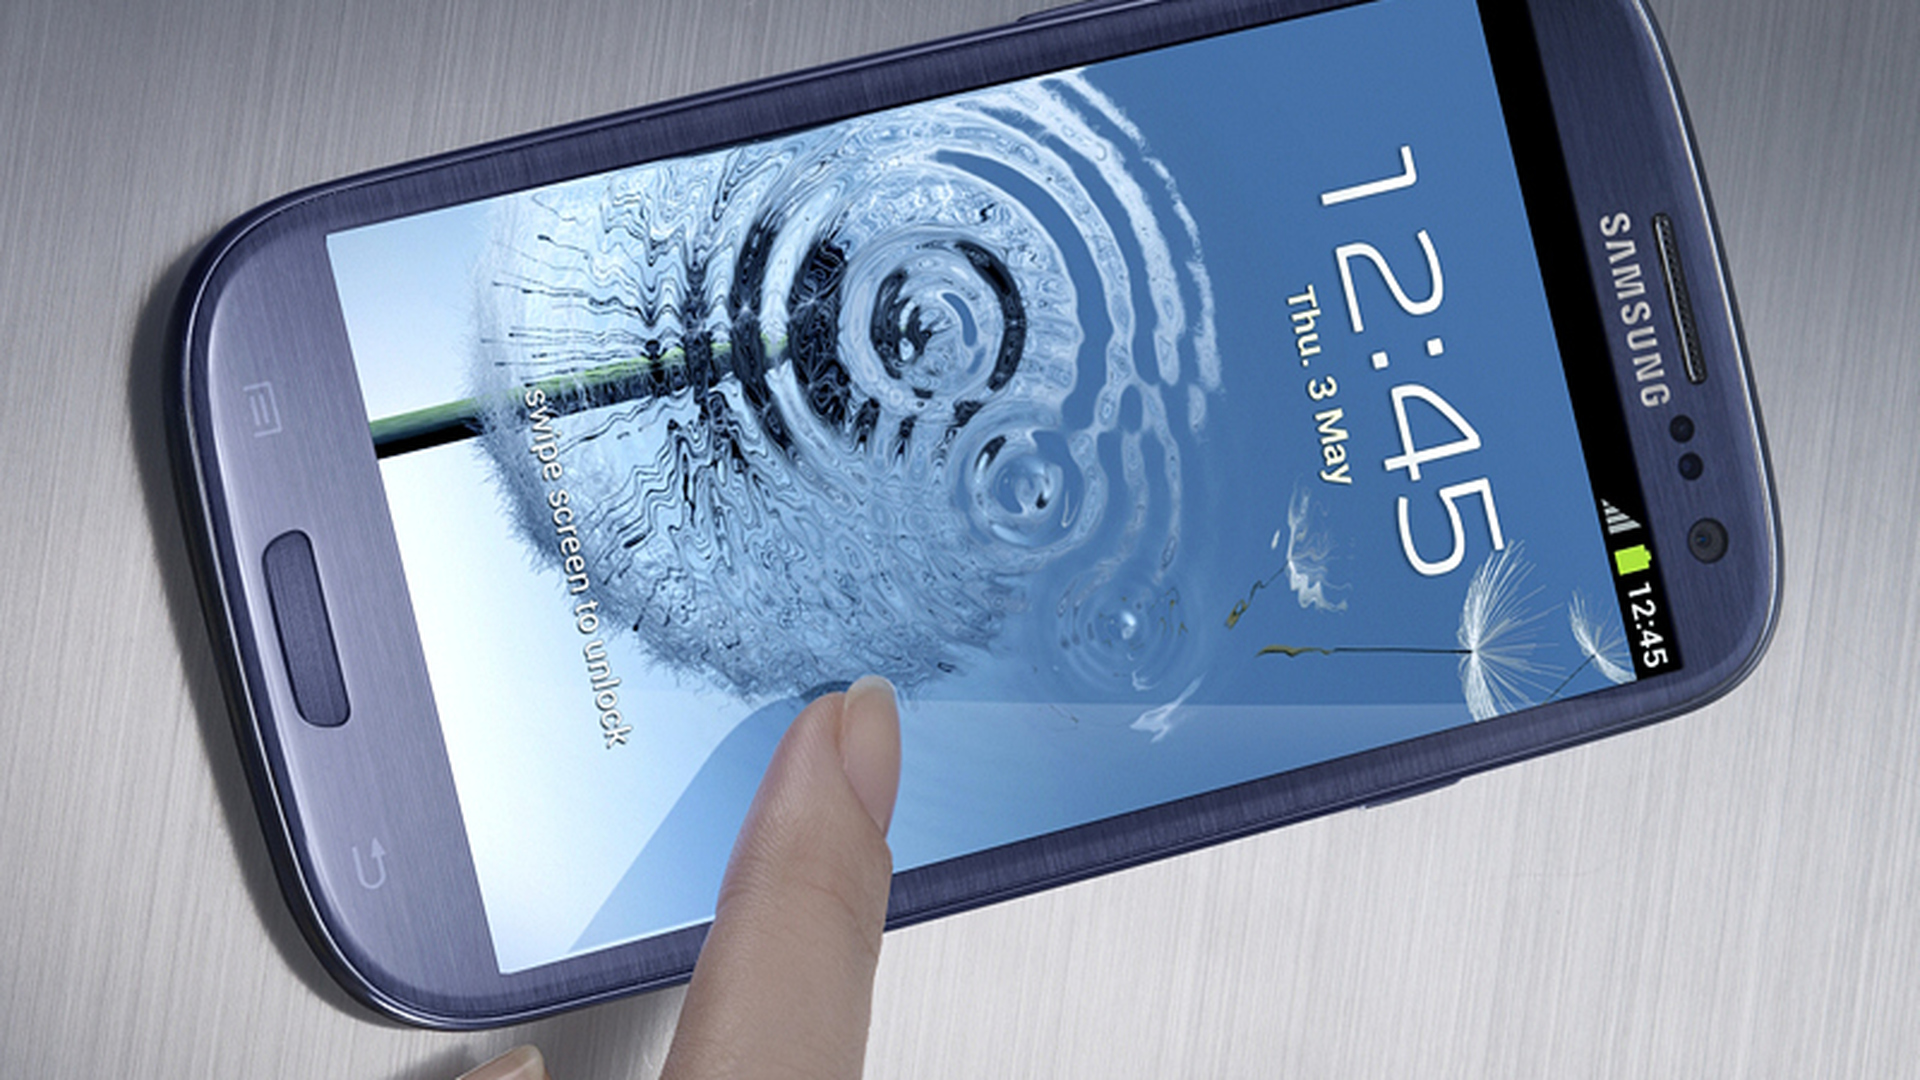 Смс 3 рубля. Samsung Galaxy s III SMS. Samsung a03s. Самсунг синий. 3 Поколения самсунгов.